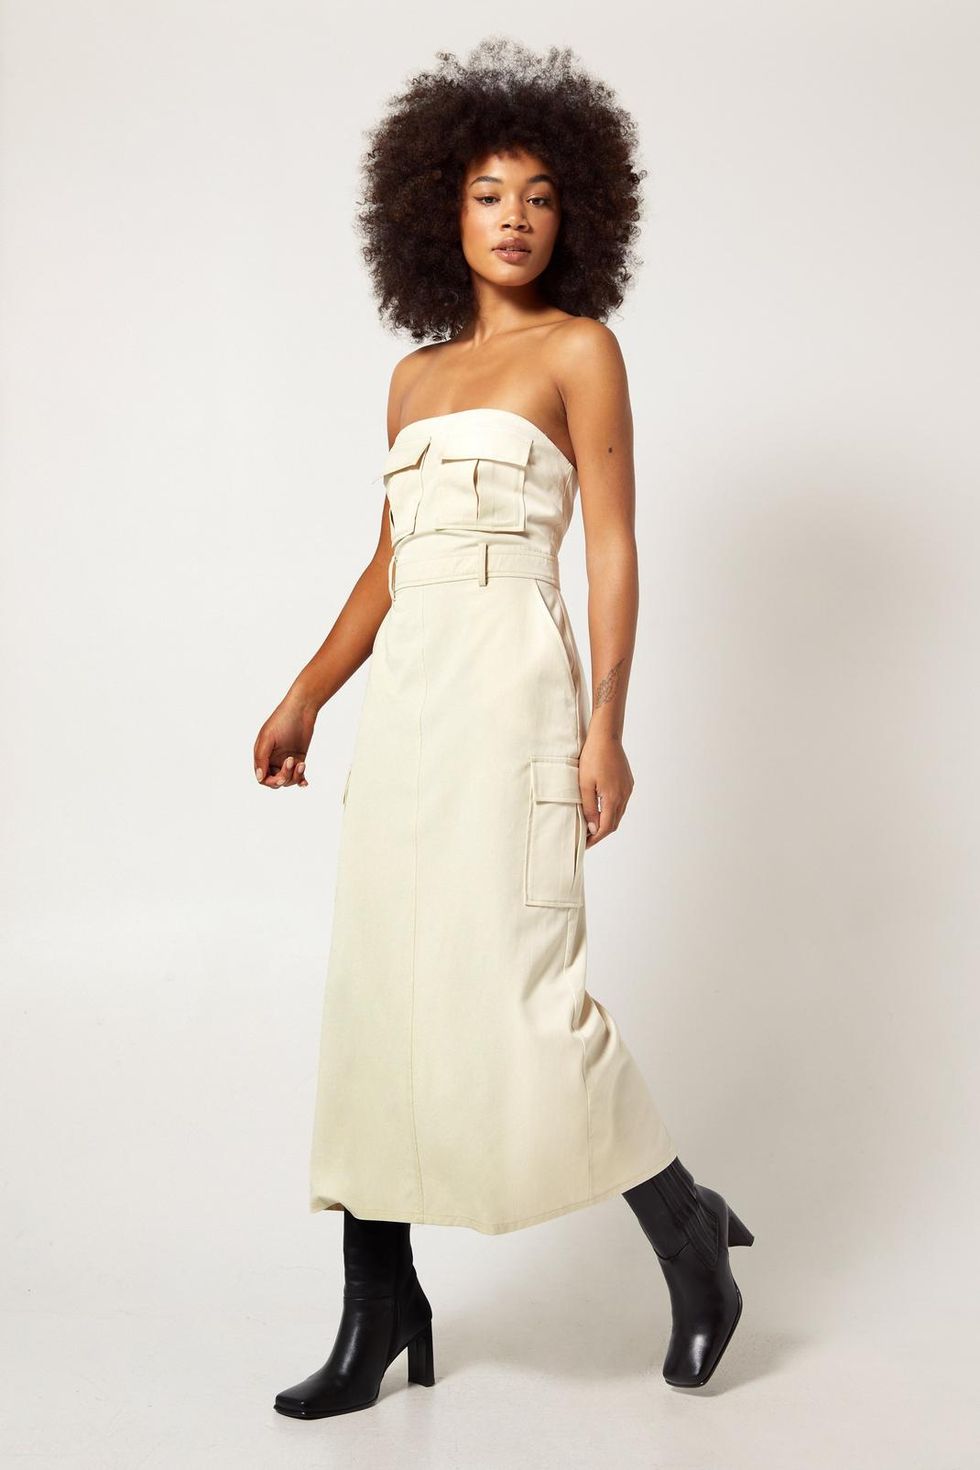 Where to Buy Spring Dresses Online - budget friendly to designer dresses!